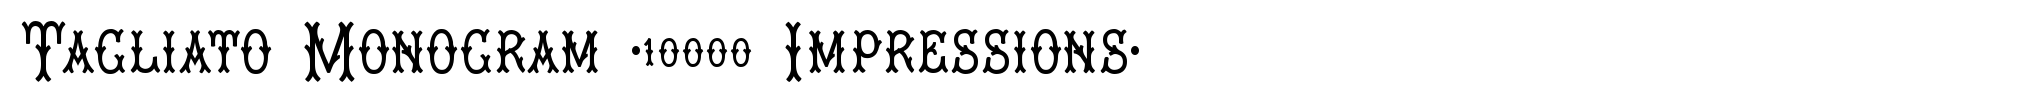 Tagliato Monogram (10000 Impressions) image